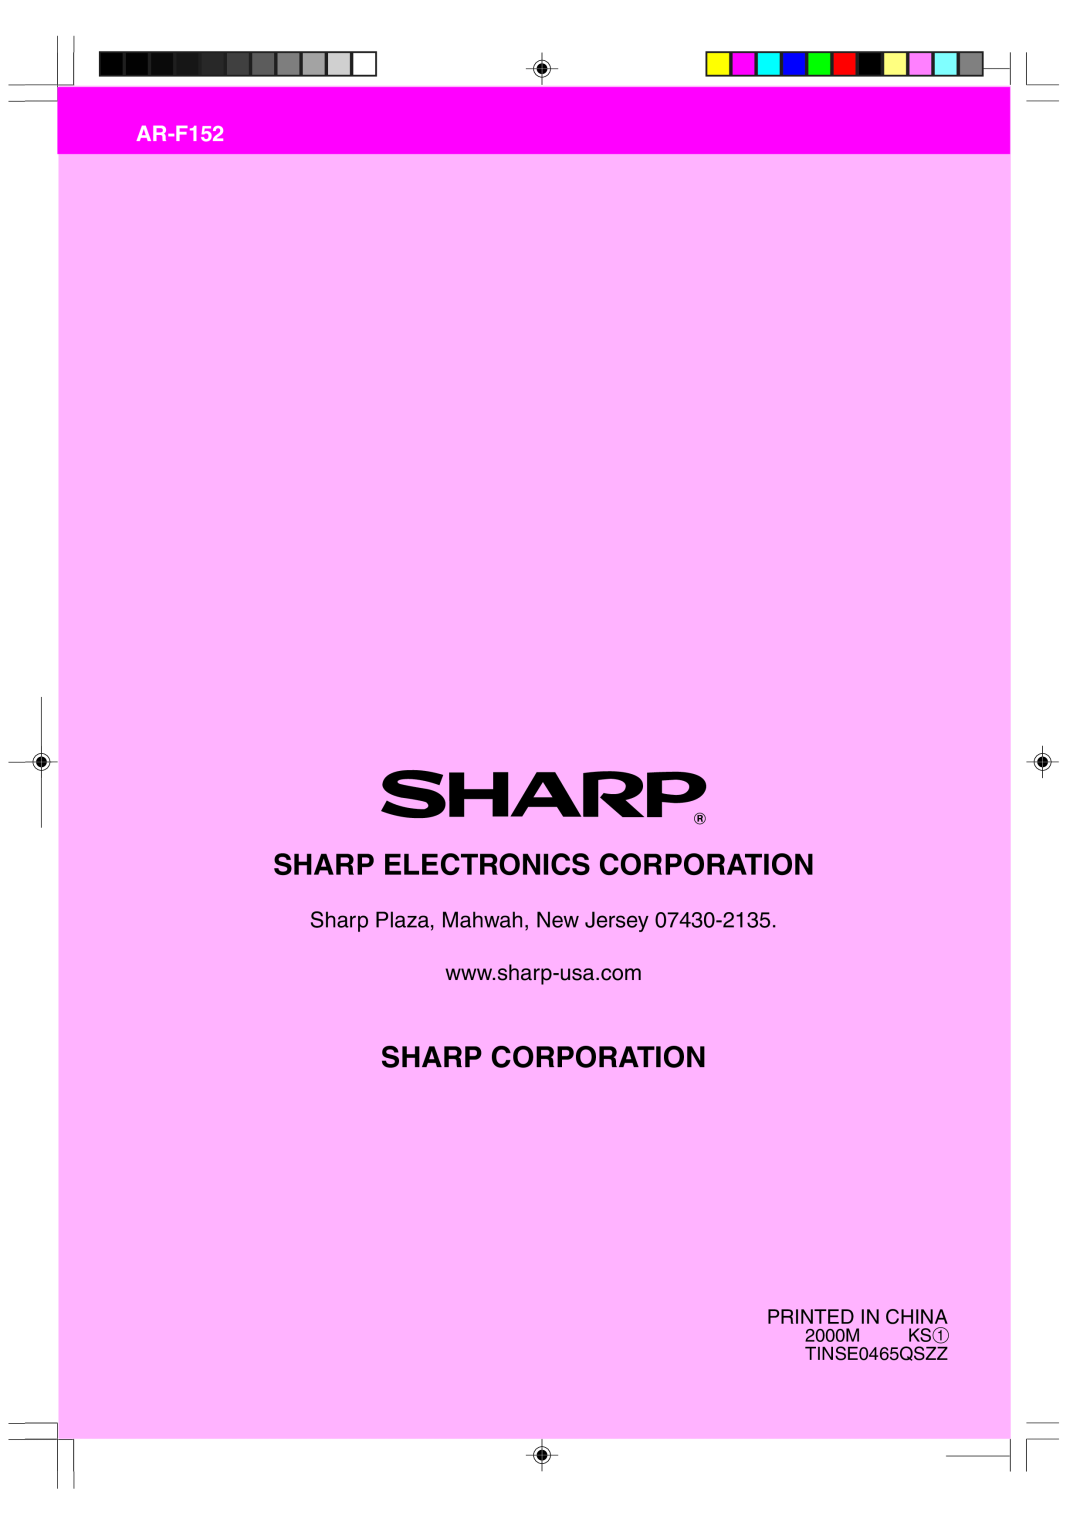 Sharp AR-F152 Sharp Plaza, Mahwah, New Jersey, Sharp Electronics Corporation, Sharp Corporation, Printed In China 